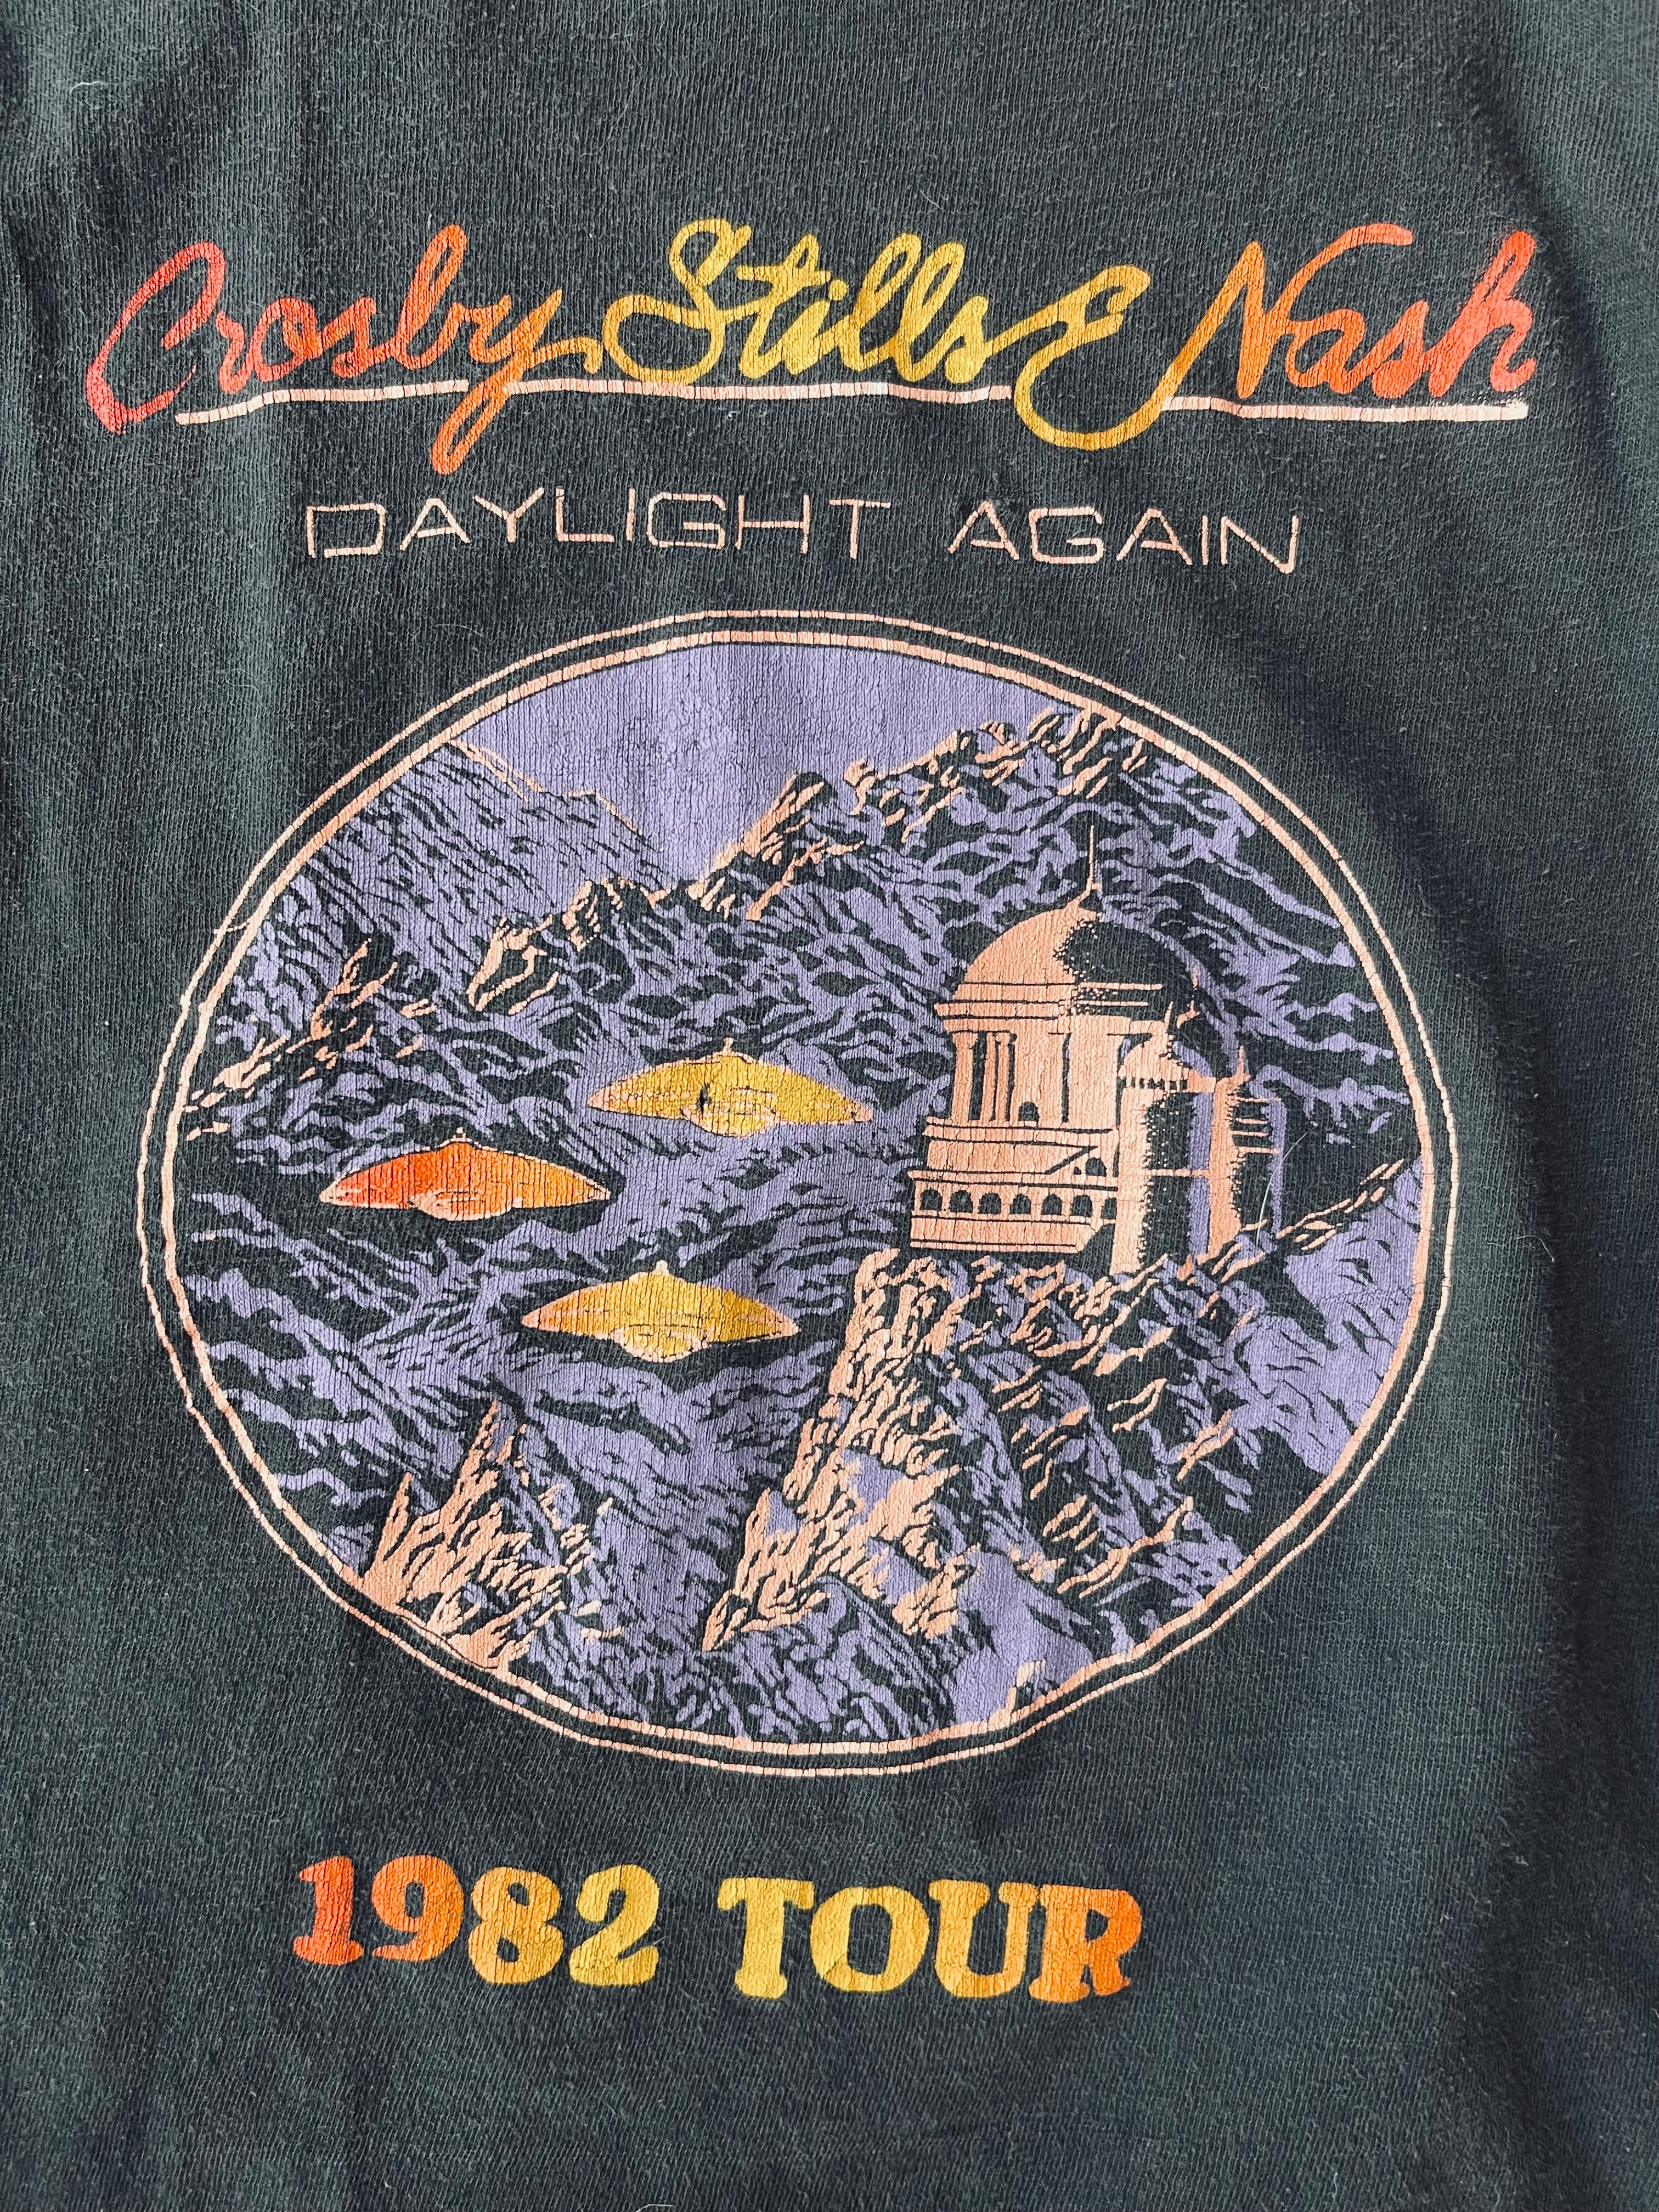 1982 Crosby, Stills & Nash “Daylight Again” Tour Tee | Medium